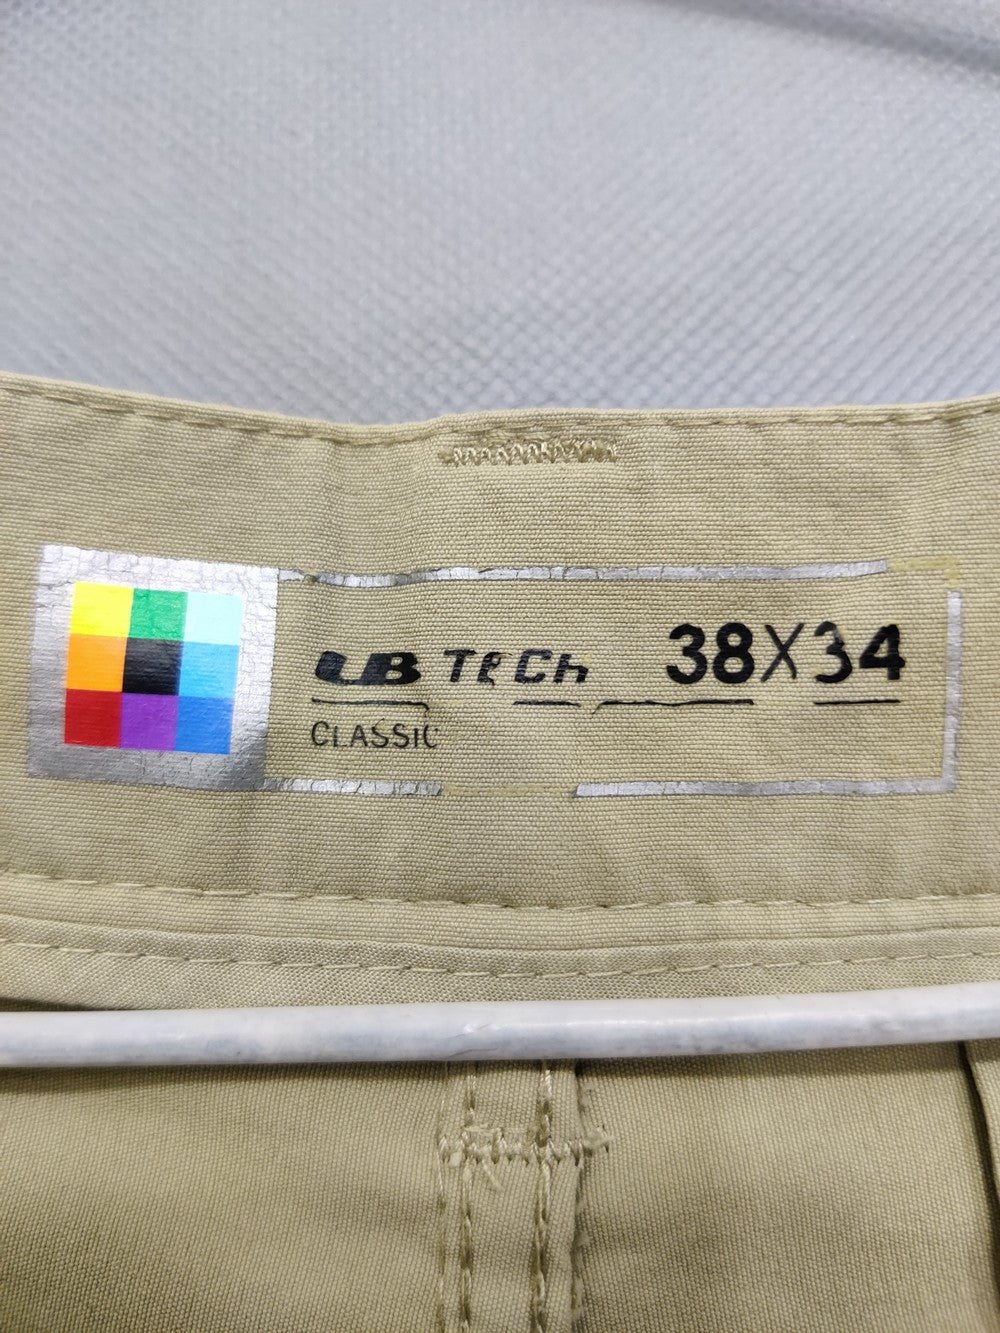 UB Tech Branded Original Cotton Dress Pant For Men